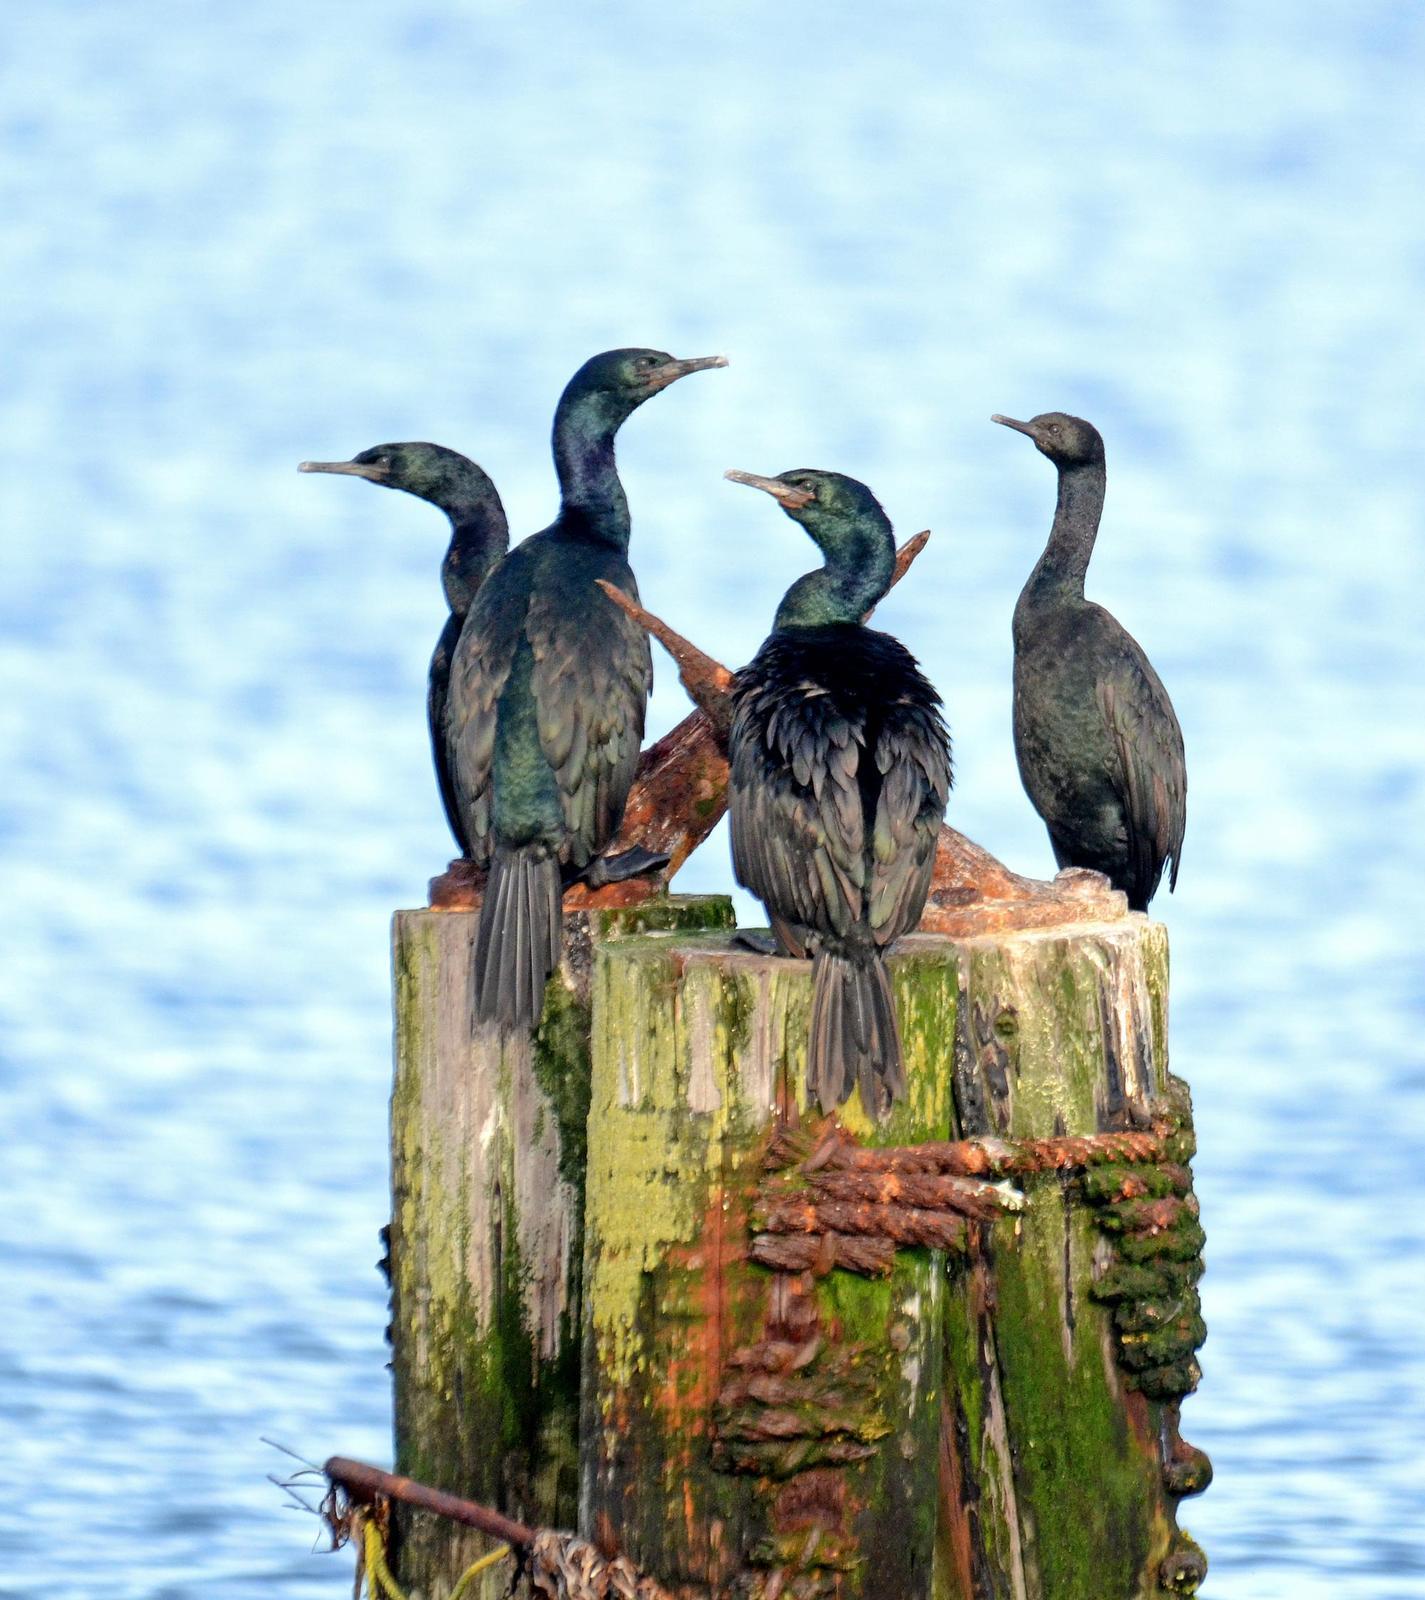 Pelagic Cormorant Photo by Steven Mlodinow